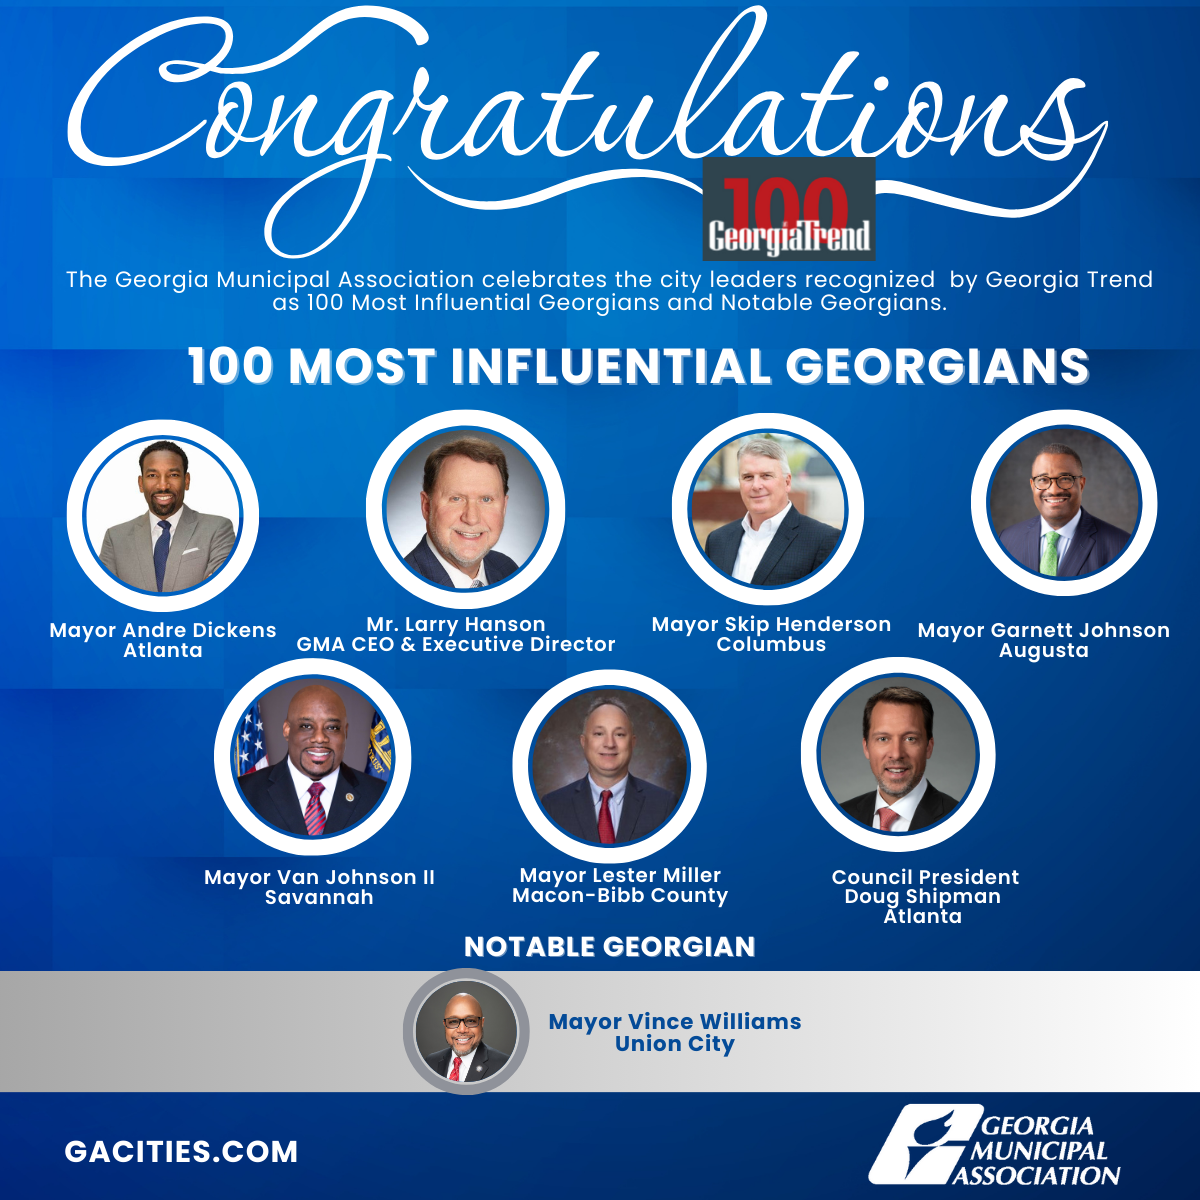 Image congratulating 100 most influential Georgians. 